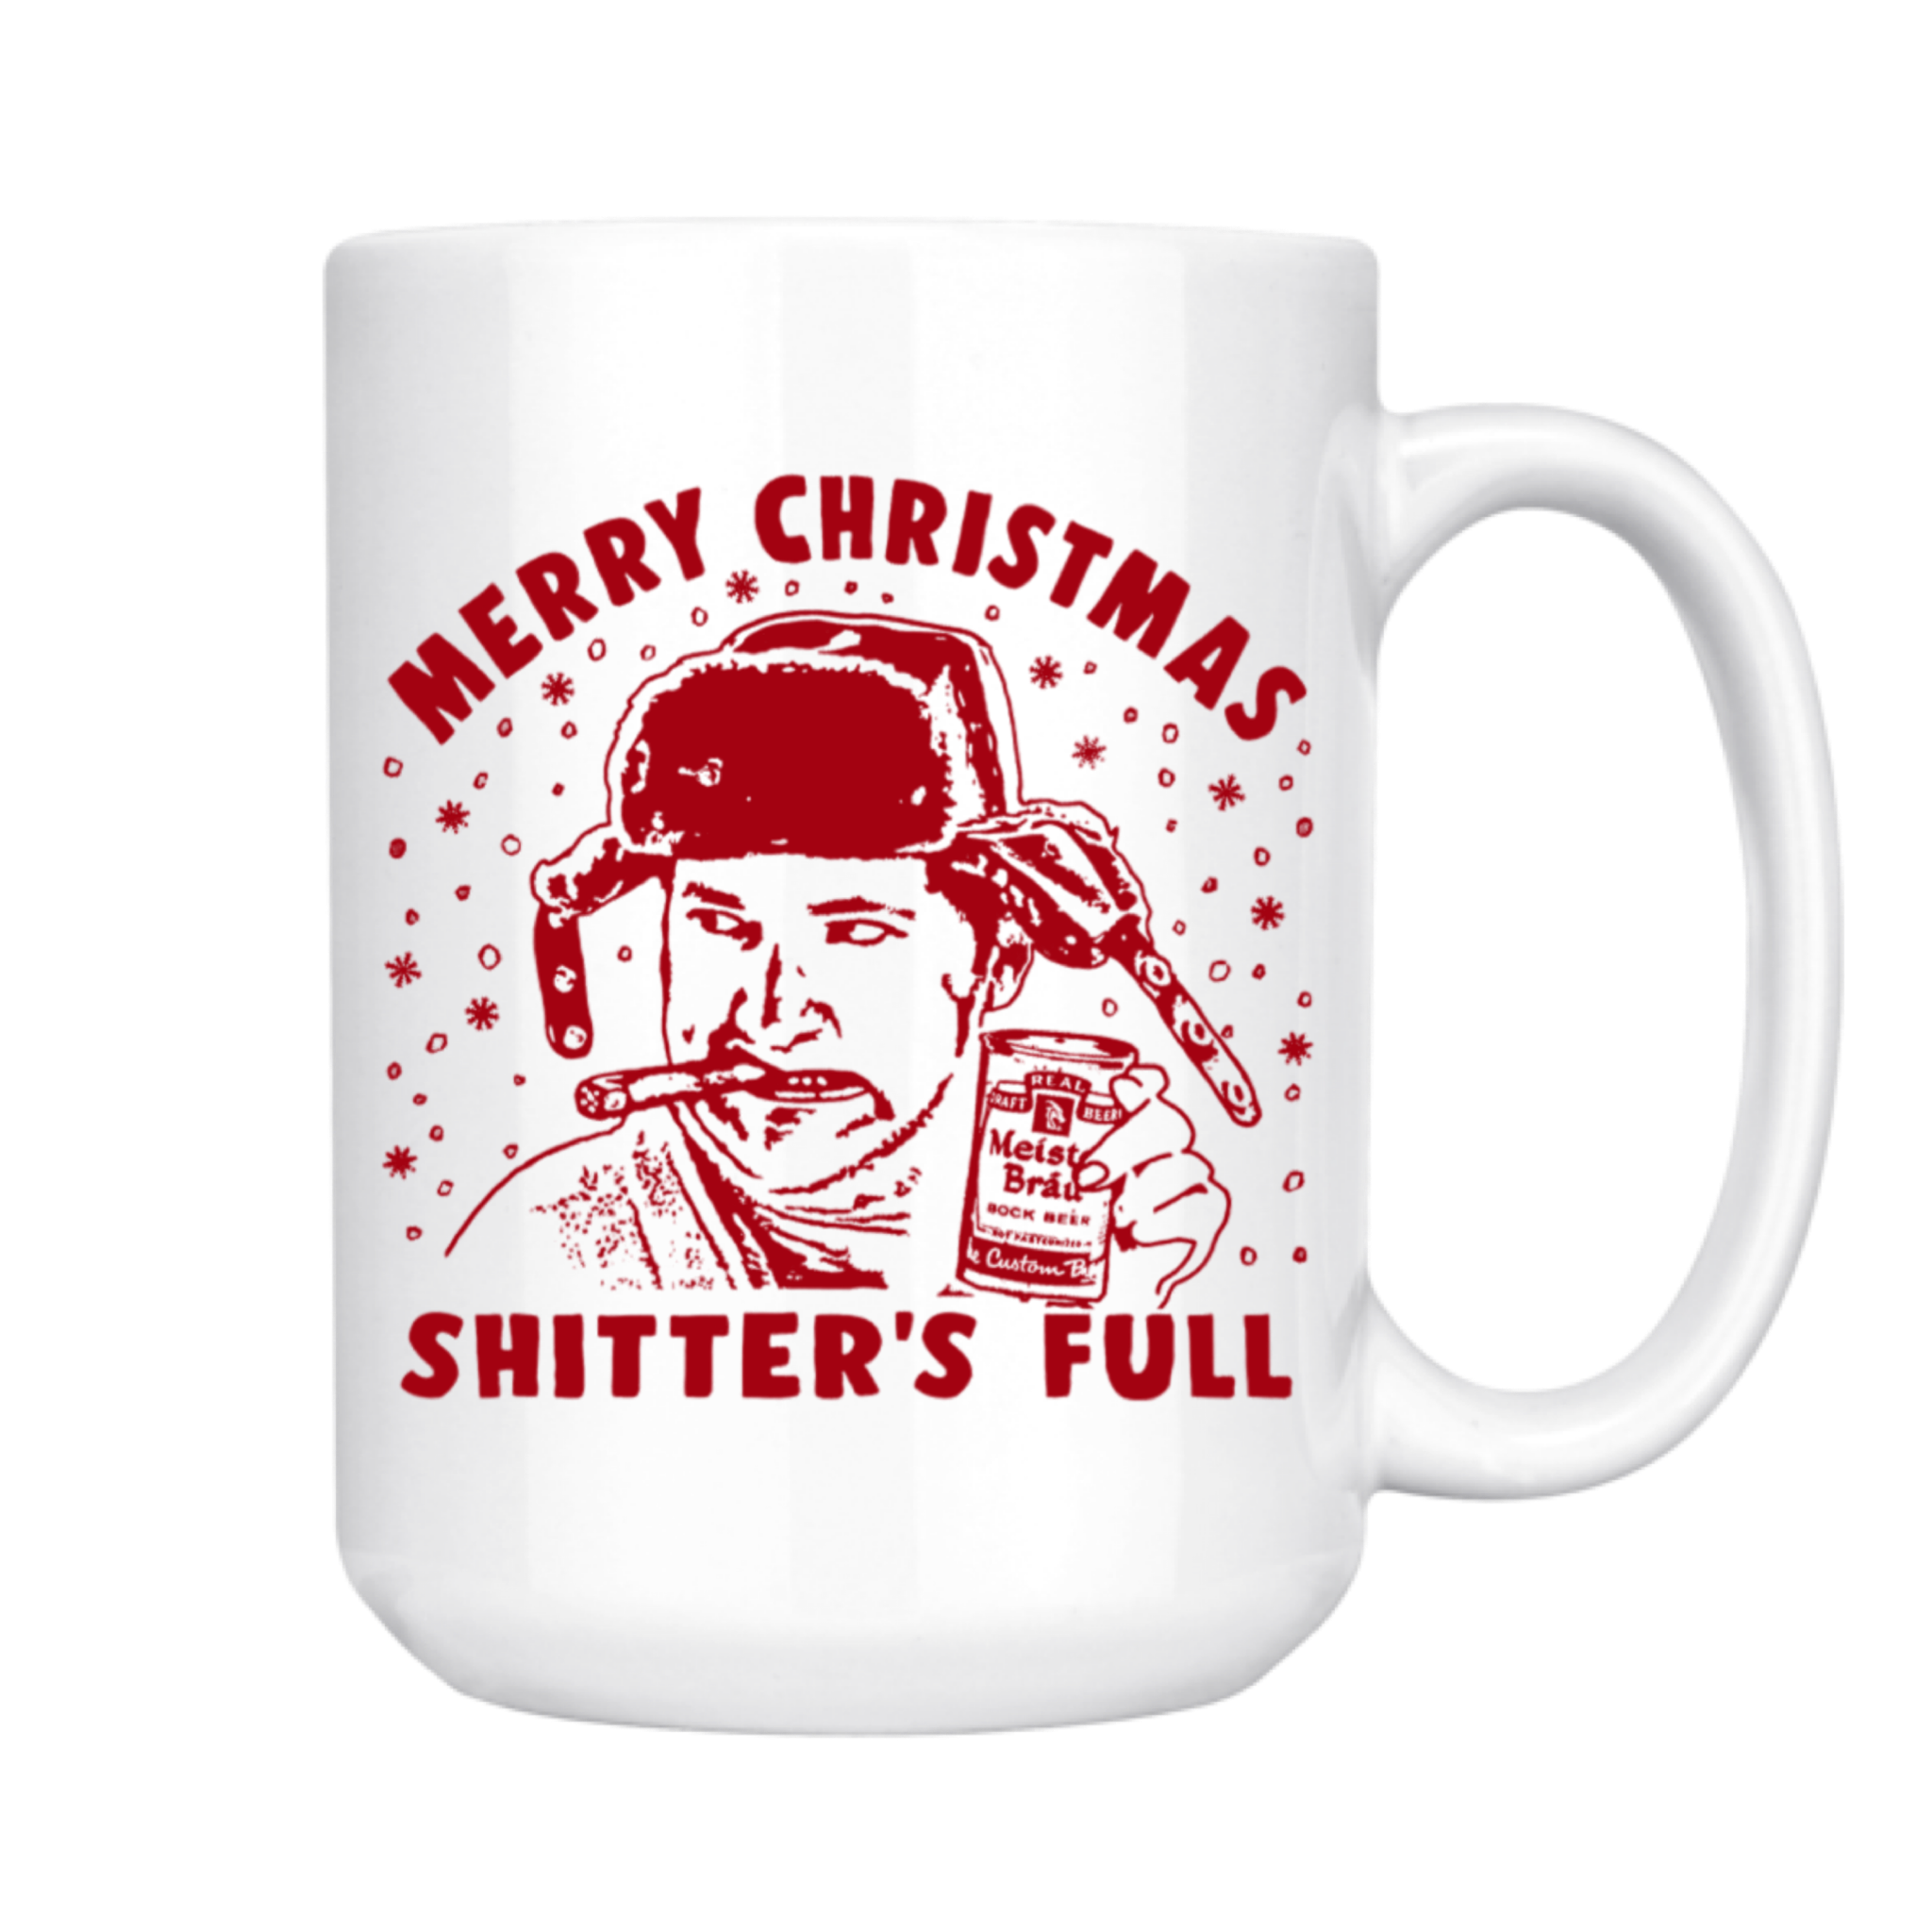 Merry Christmas Shitters full